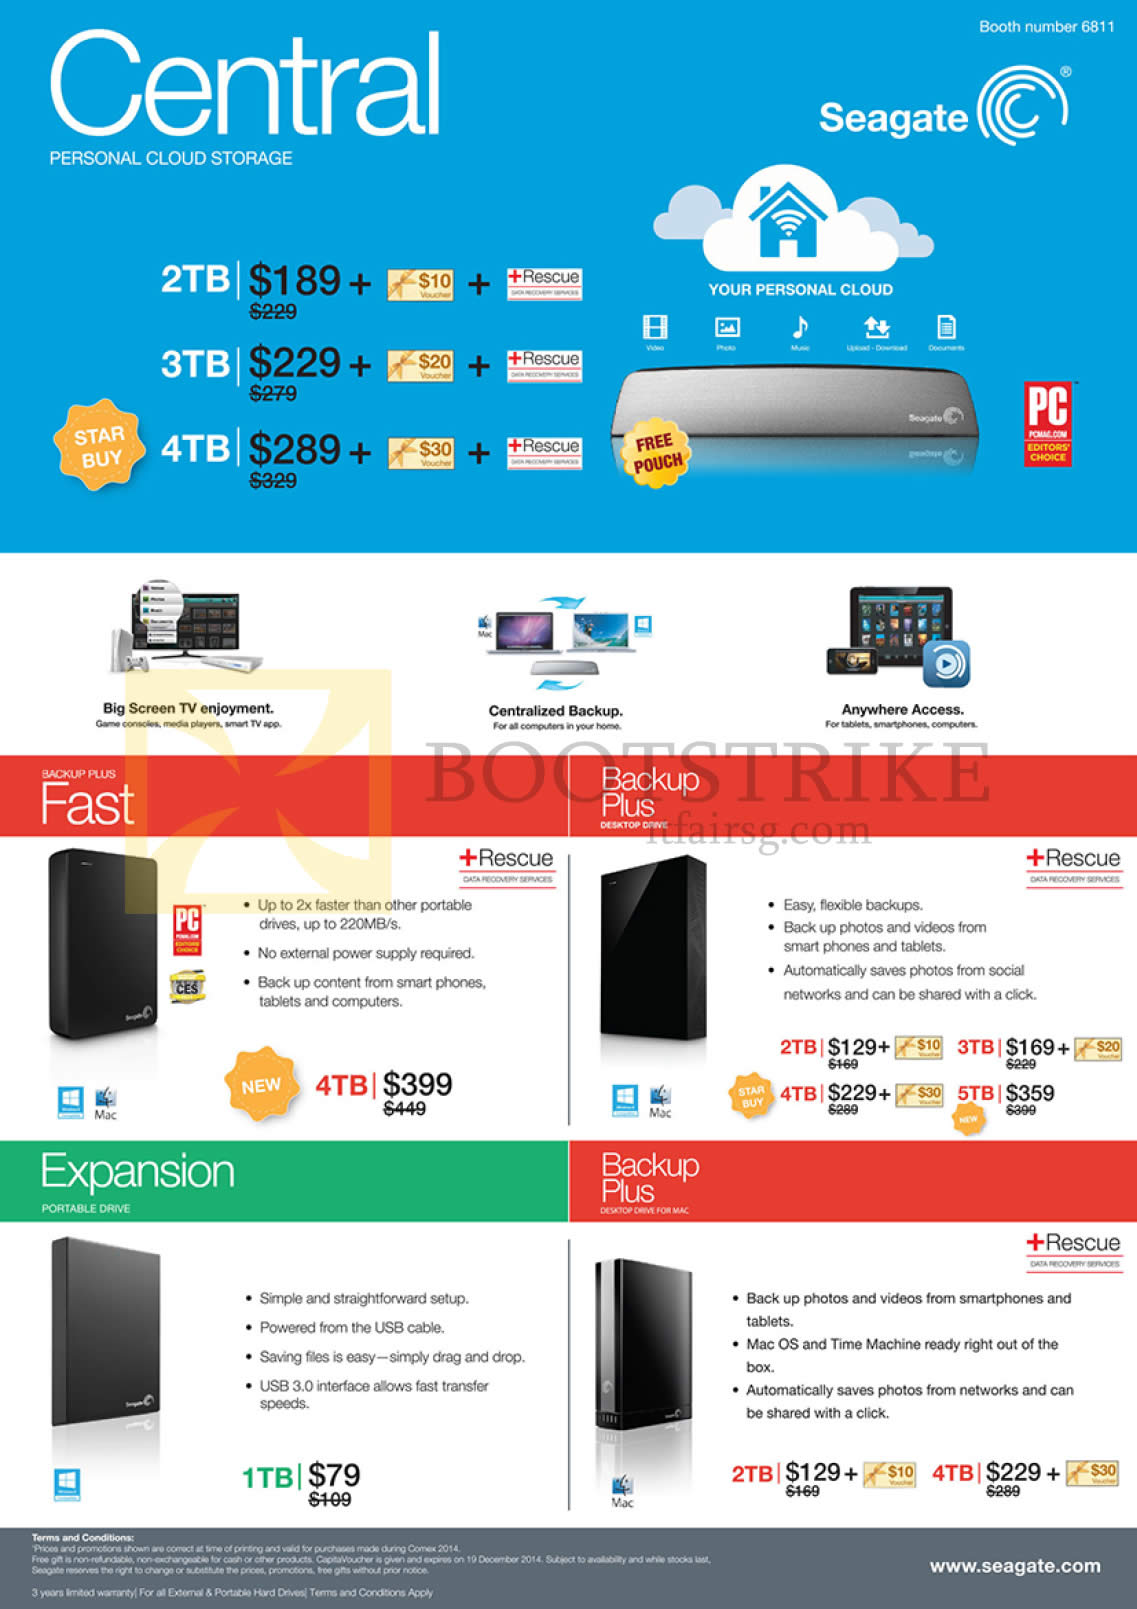 COMEX 2014 price list image brochure of Seagate External Storage Central Cloud Storage, Backup Plus Fast, Backup Plus Desktop Drive, For Mac, Expansion Portable Drive